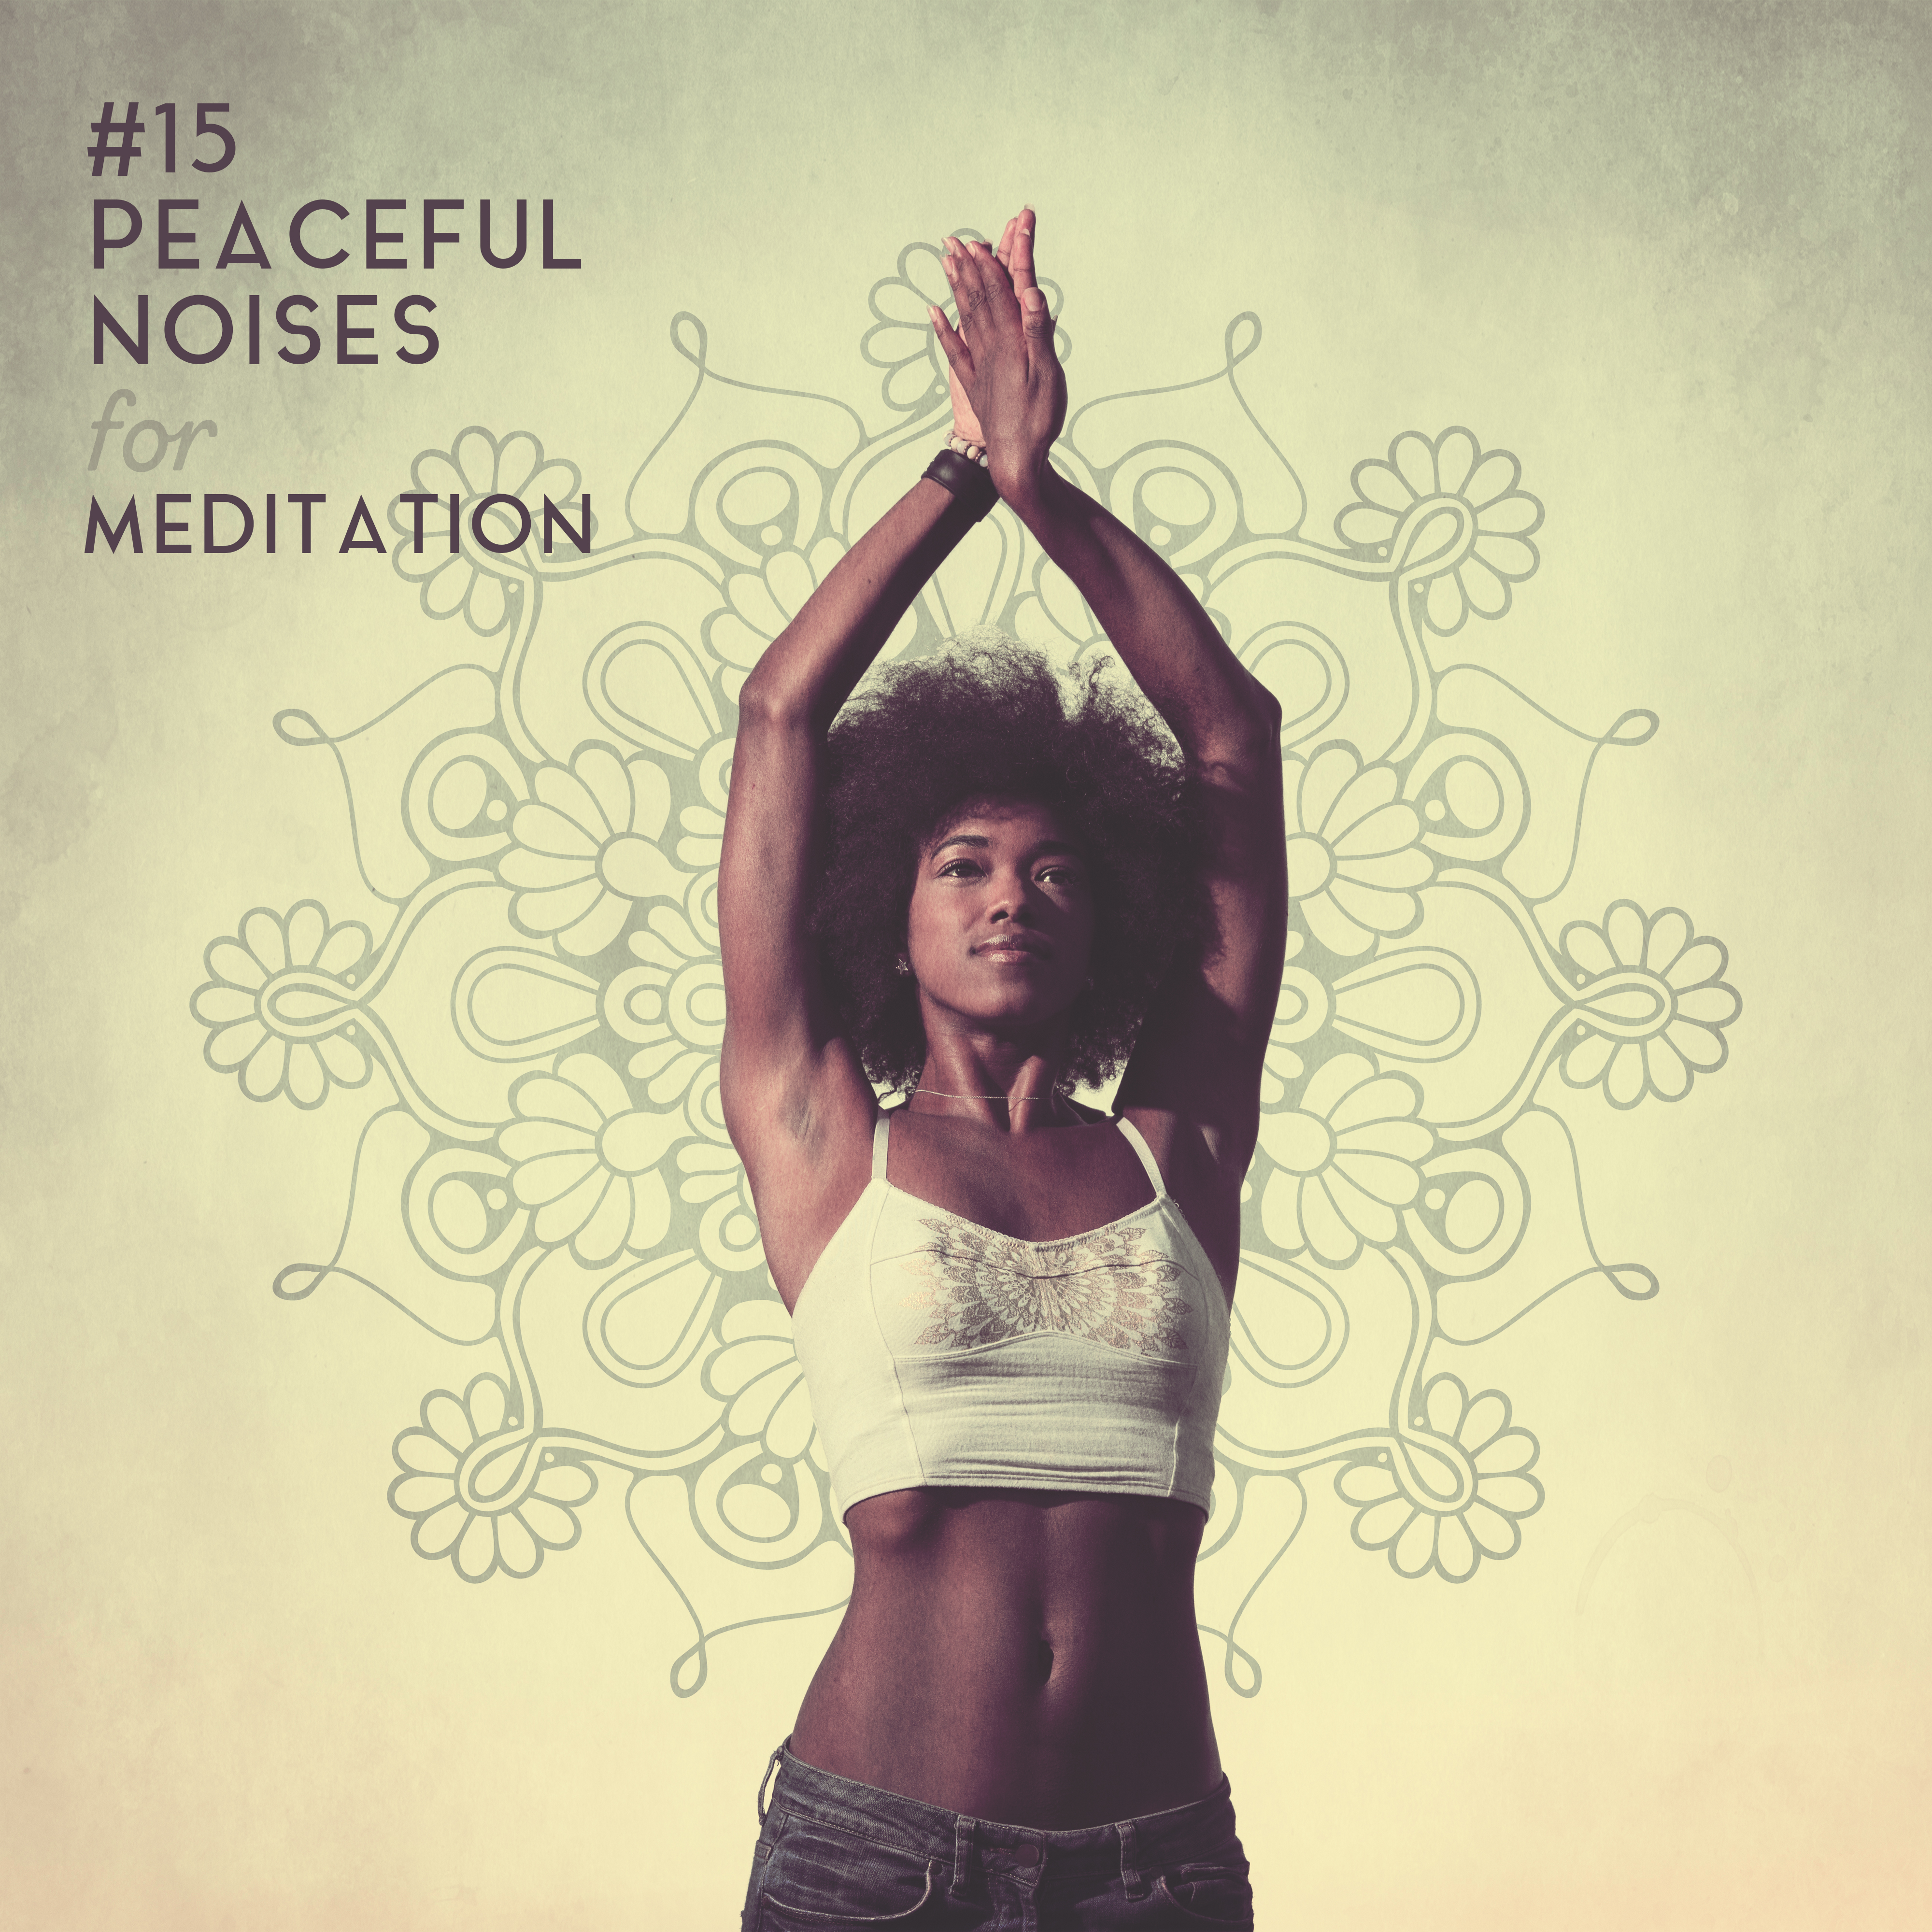 #15 Peaceful Noises for Meditation